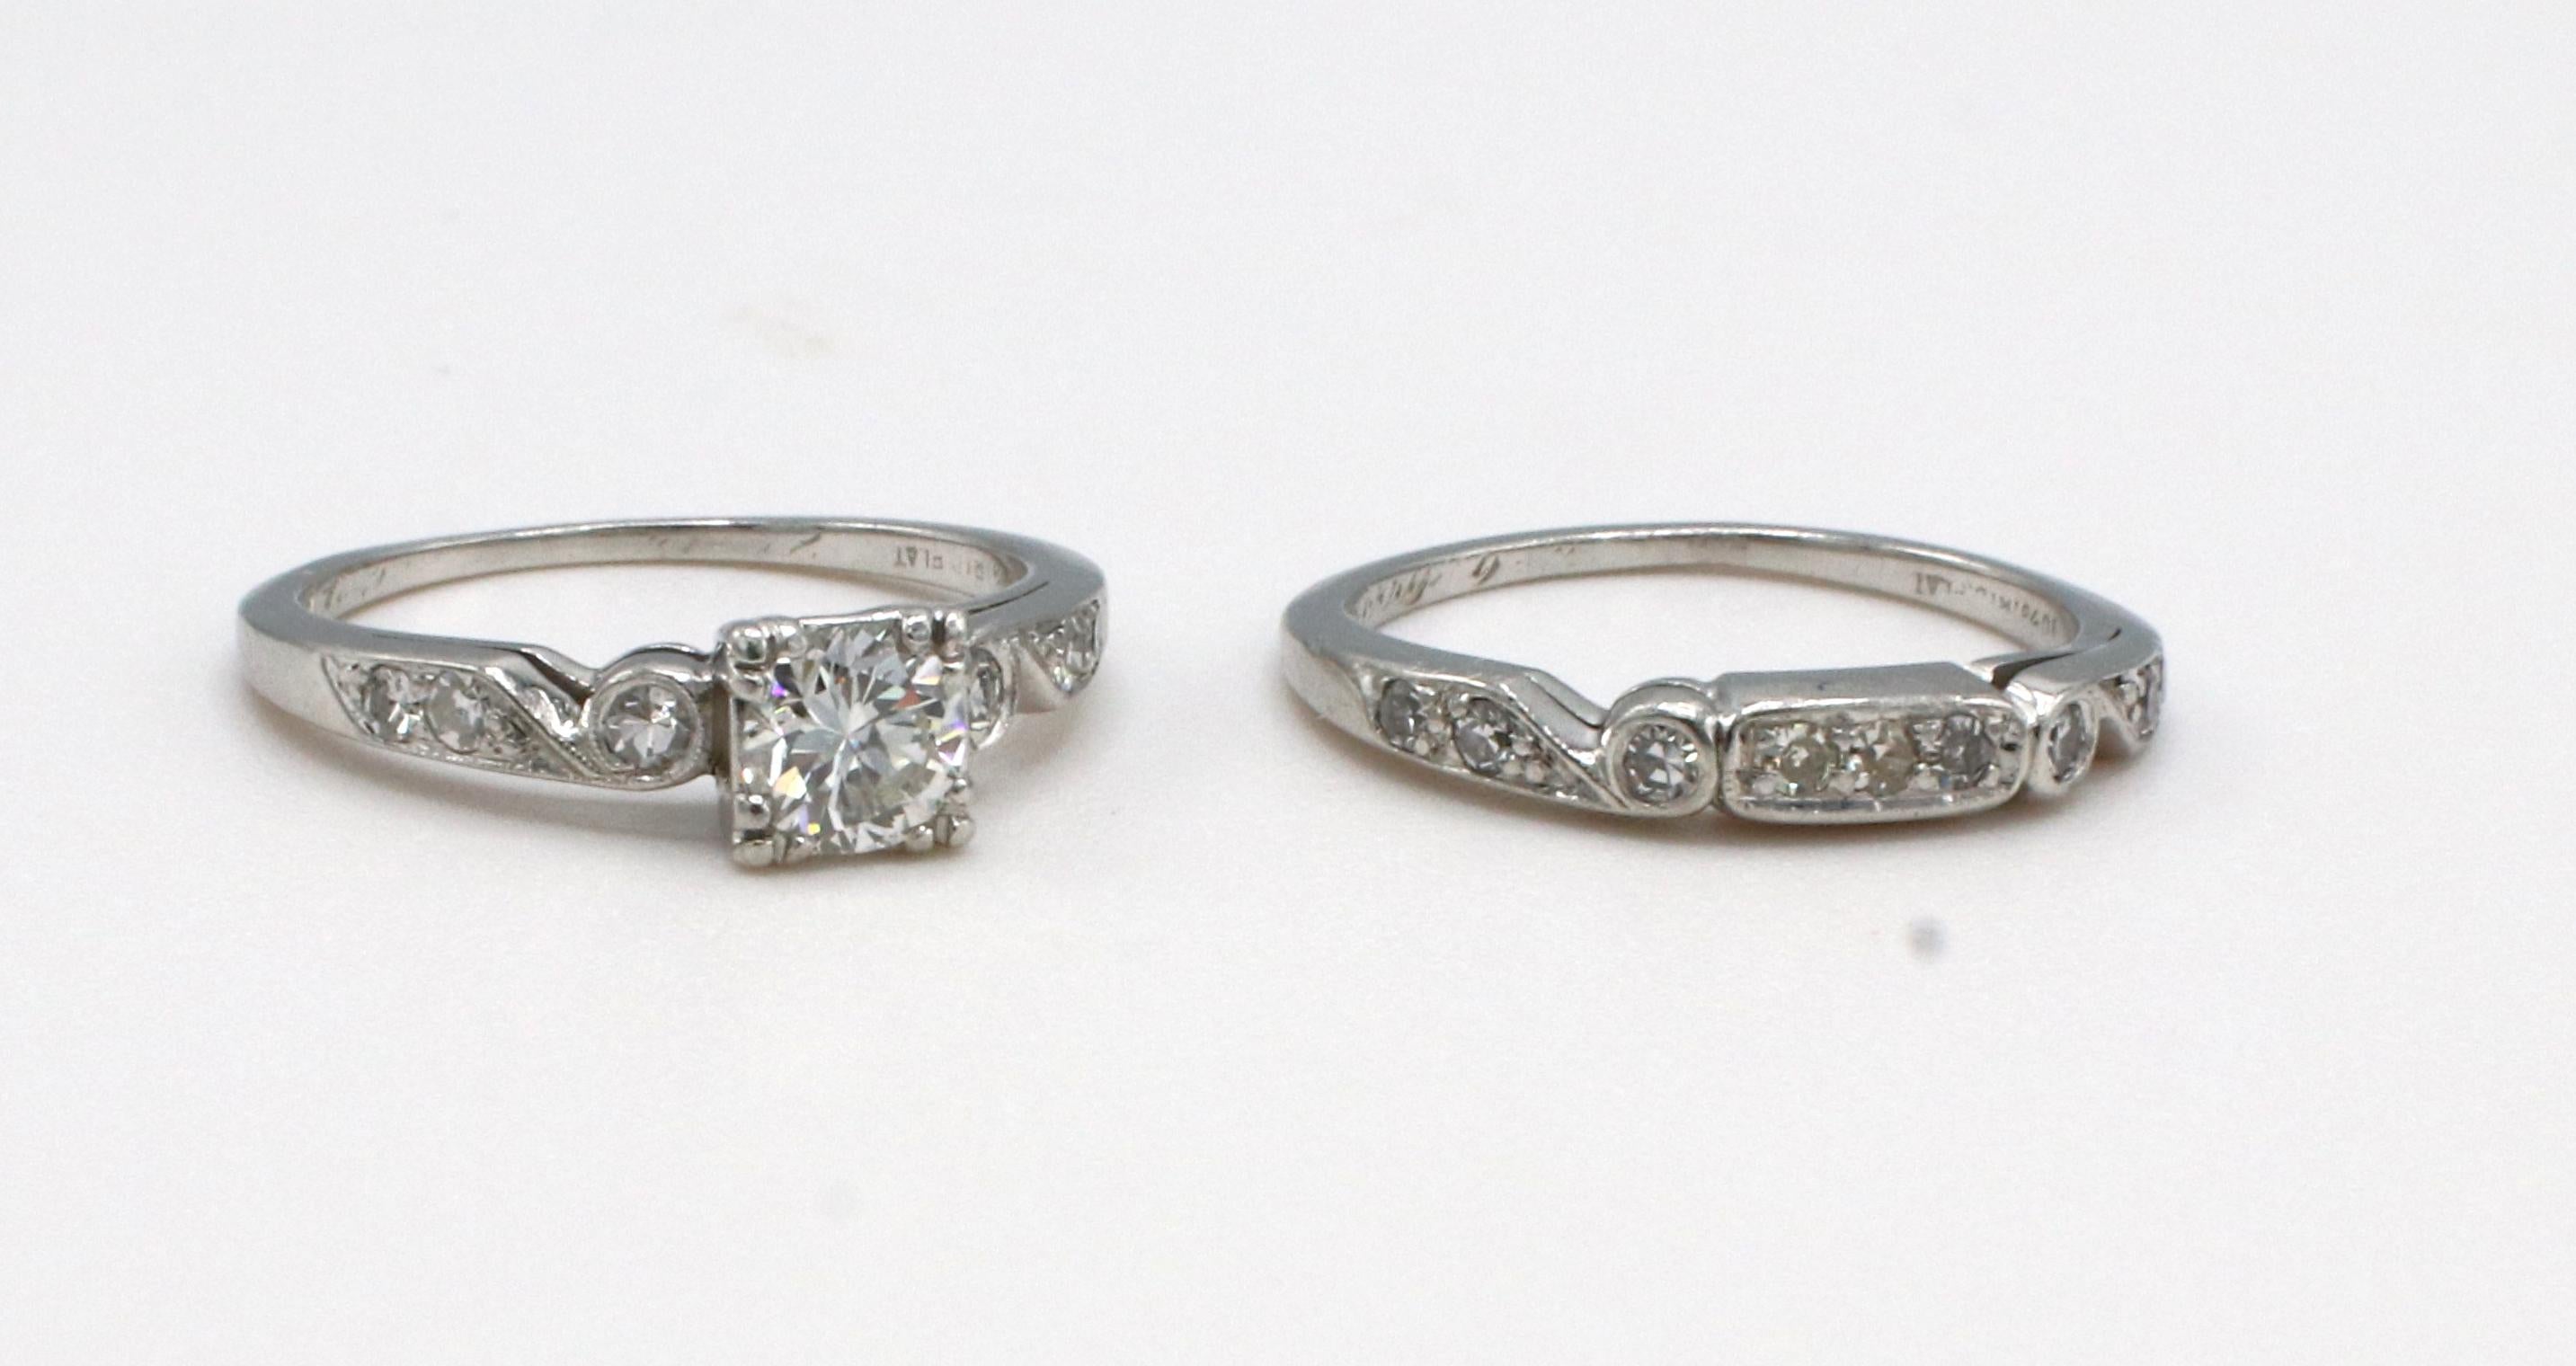 Antique Art Deco Platinum Diamond Engagement Ring & Wedding Band Set 
Metal: Platinum
Weight: 6.6 grams
Diamond: Approx. .50 carat I VS round diamond
Accent diamonds: Approx. .16 CTW I VS round diamonds
Size: 5.5 (US)
Note: Original engraving inside